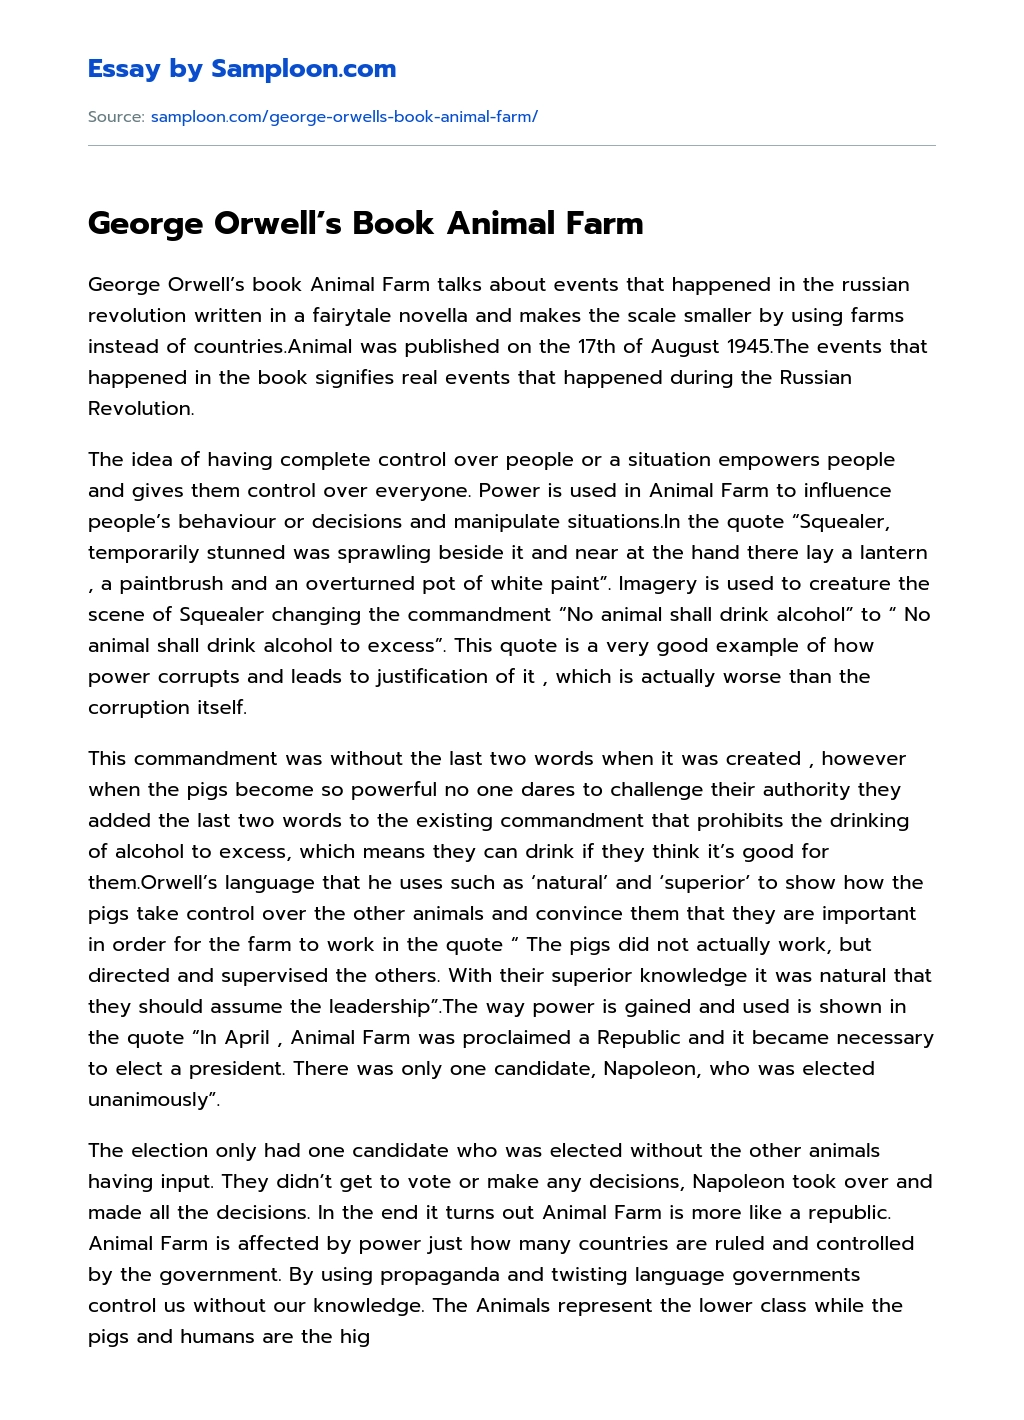 George Orwell’s Book Animal Farm Review essay